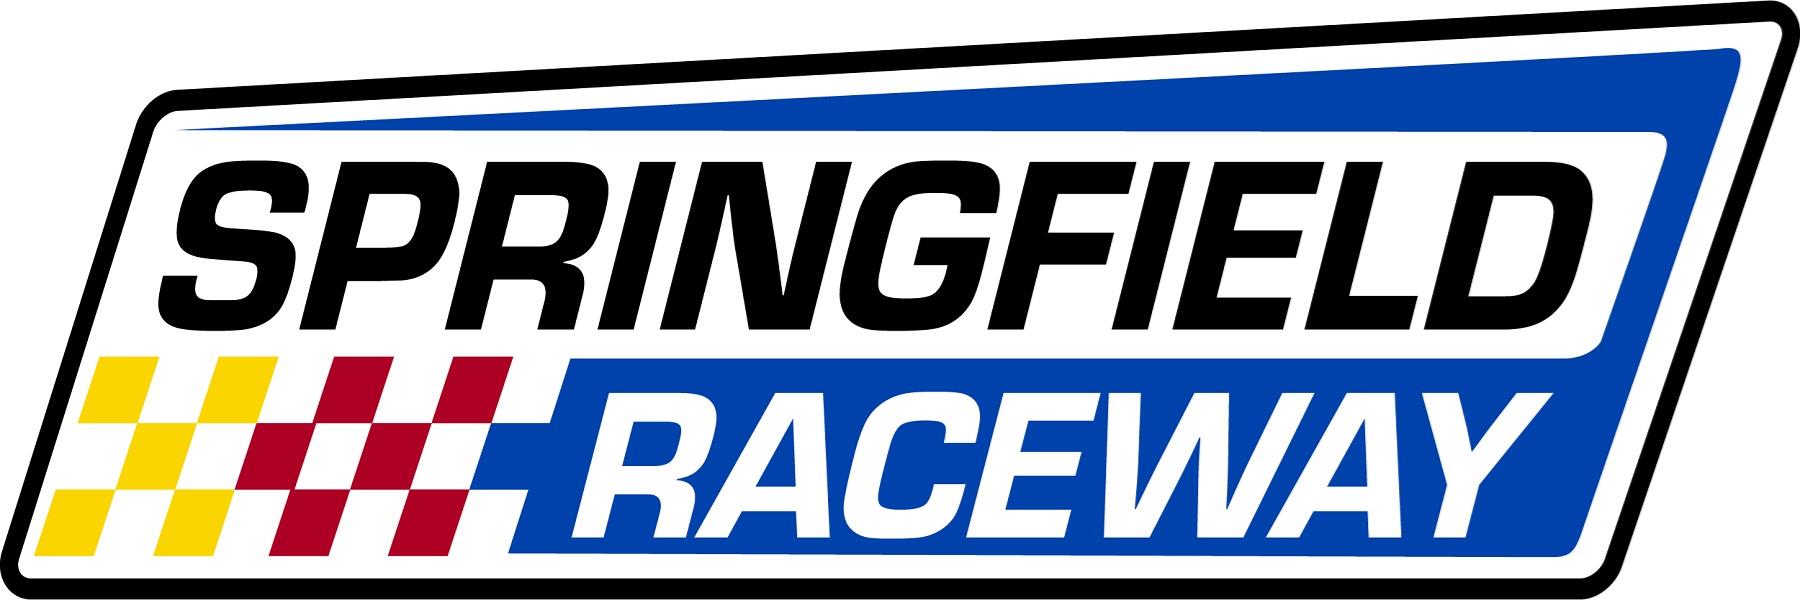 5/1/2021 - Springfield Raceway